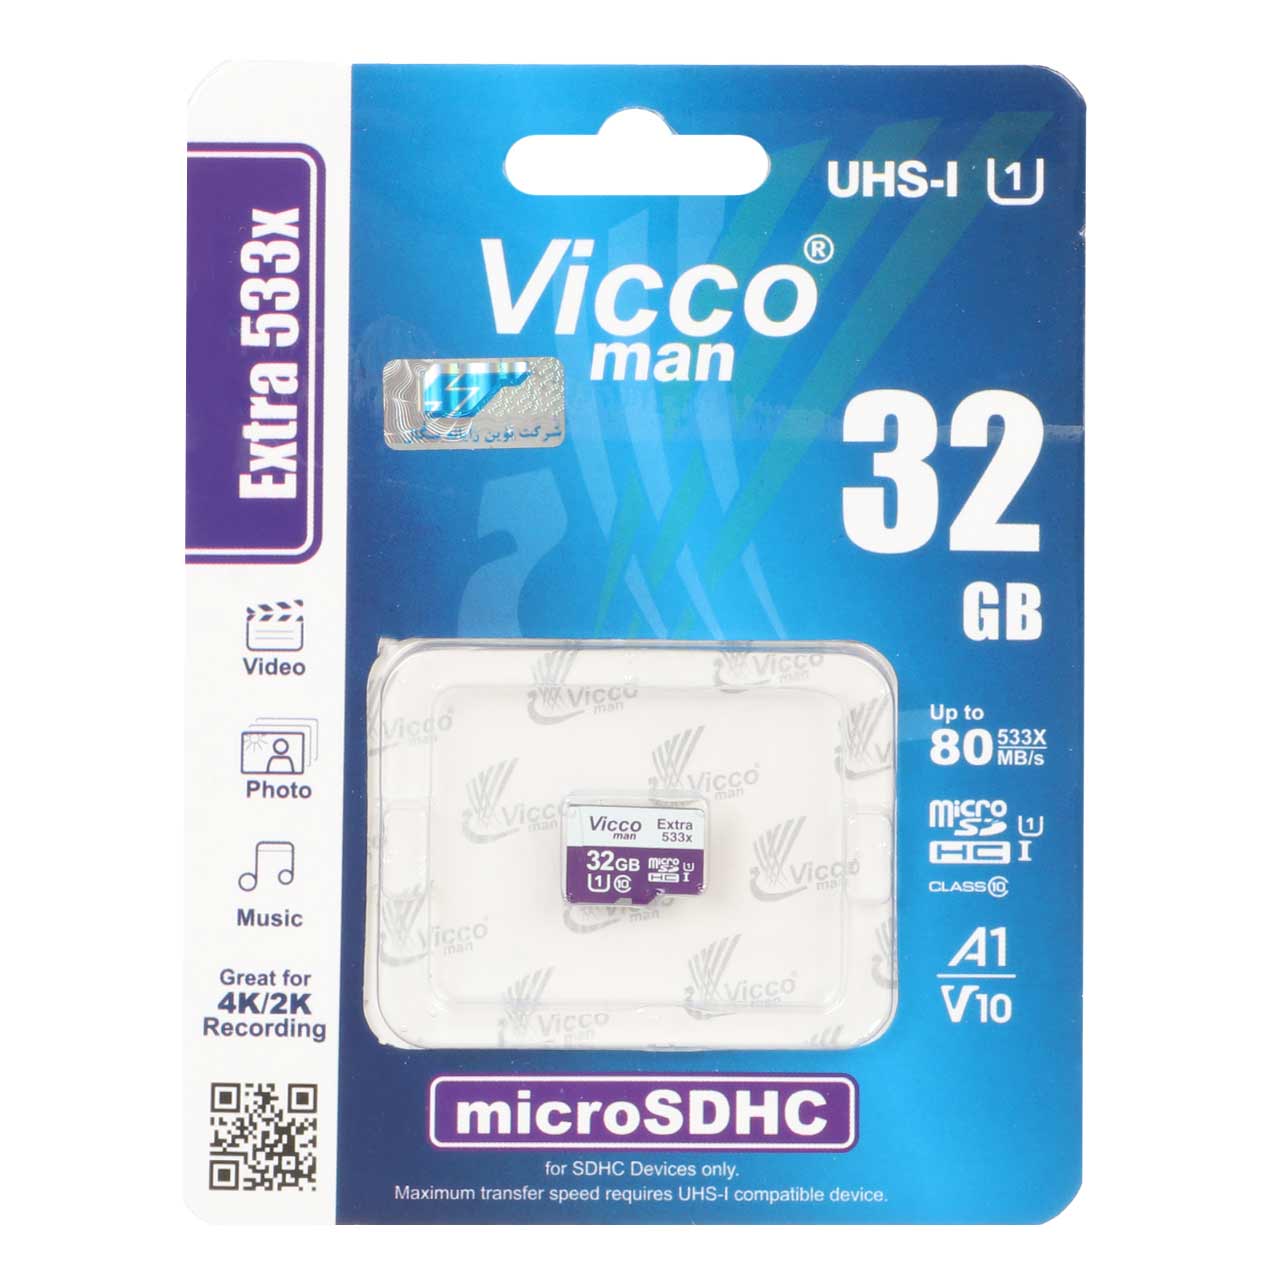 Vicco man MicroSDHC UHS-I U1 Class 10 Extra 533X- 32GB